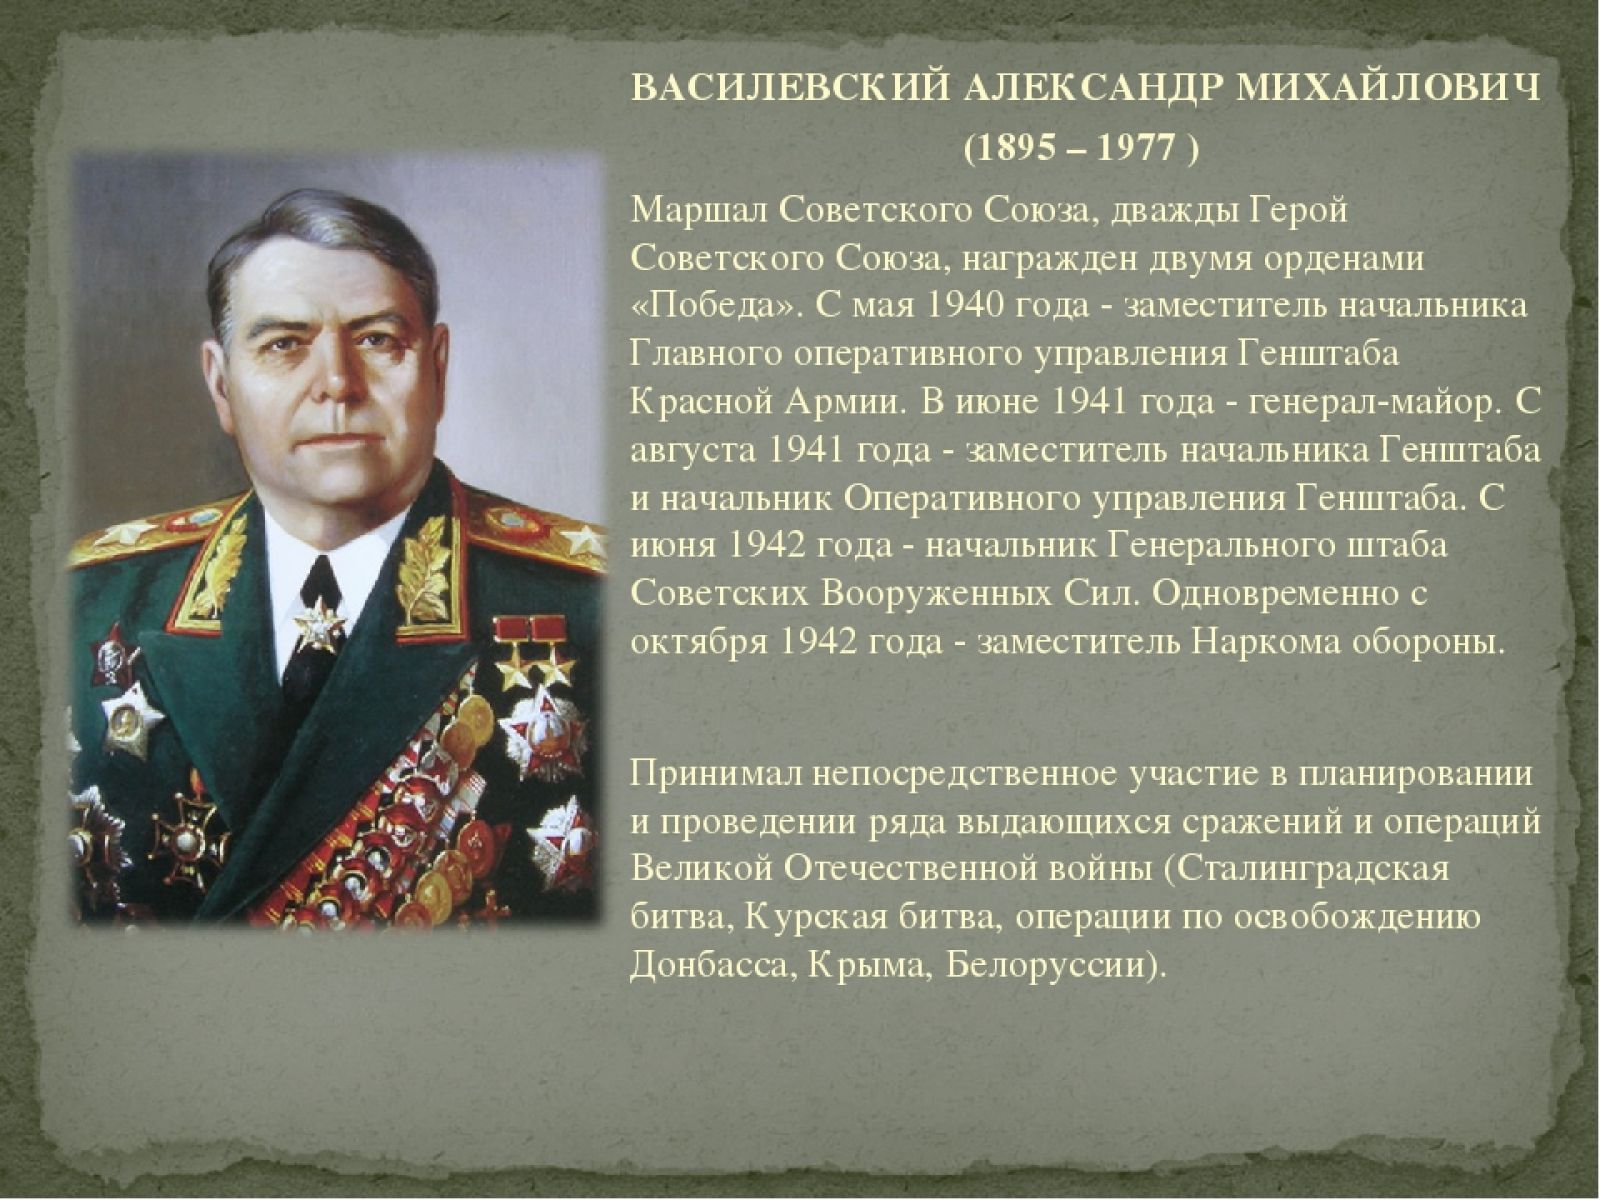 Василевский Александр Михайлович (1895-1977) — Маршал советского Союза.